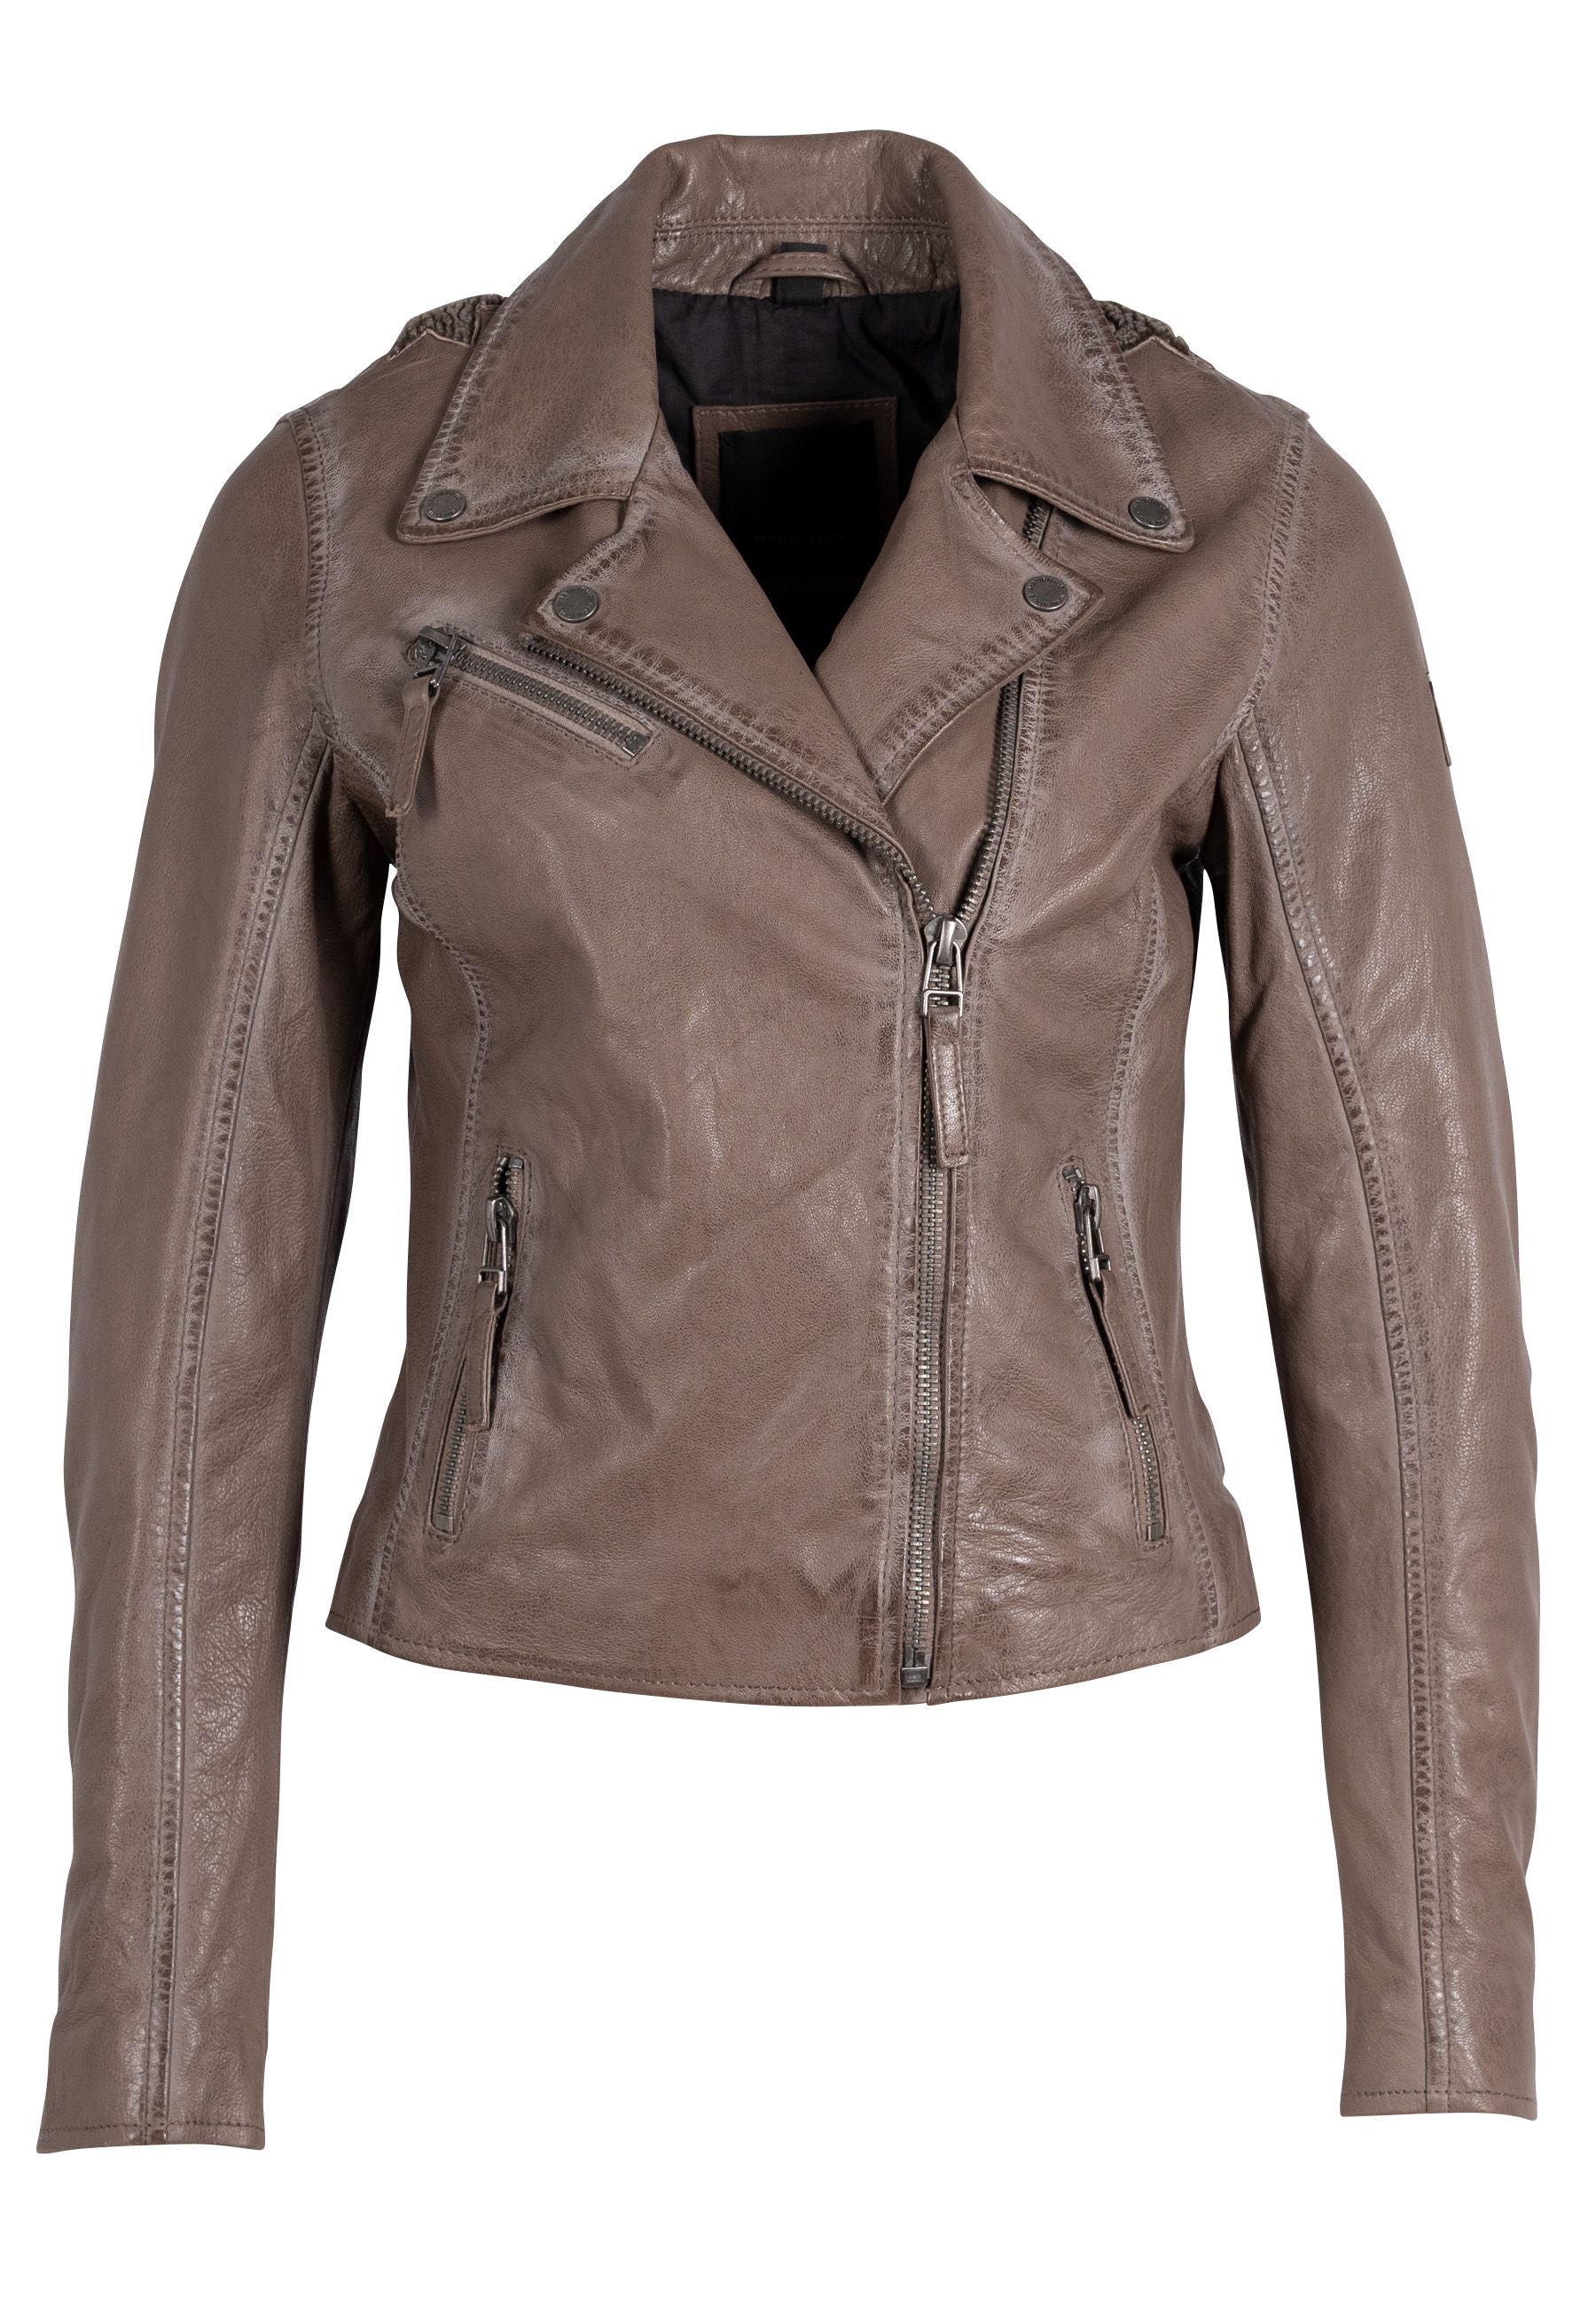 Mauritius - Wana RF Woman's Leather Jacket - White